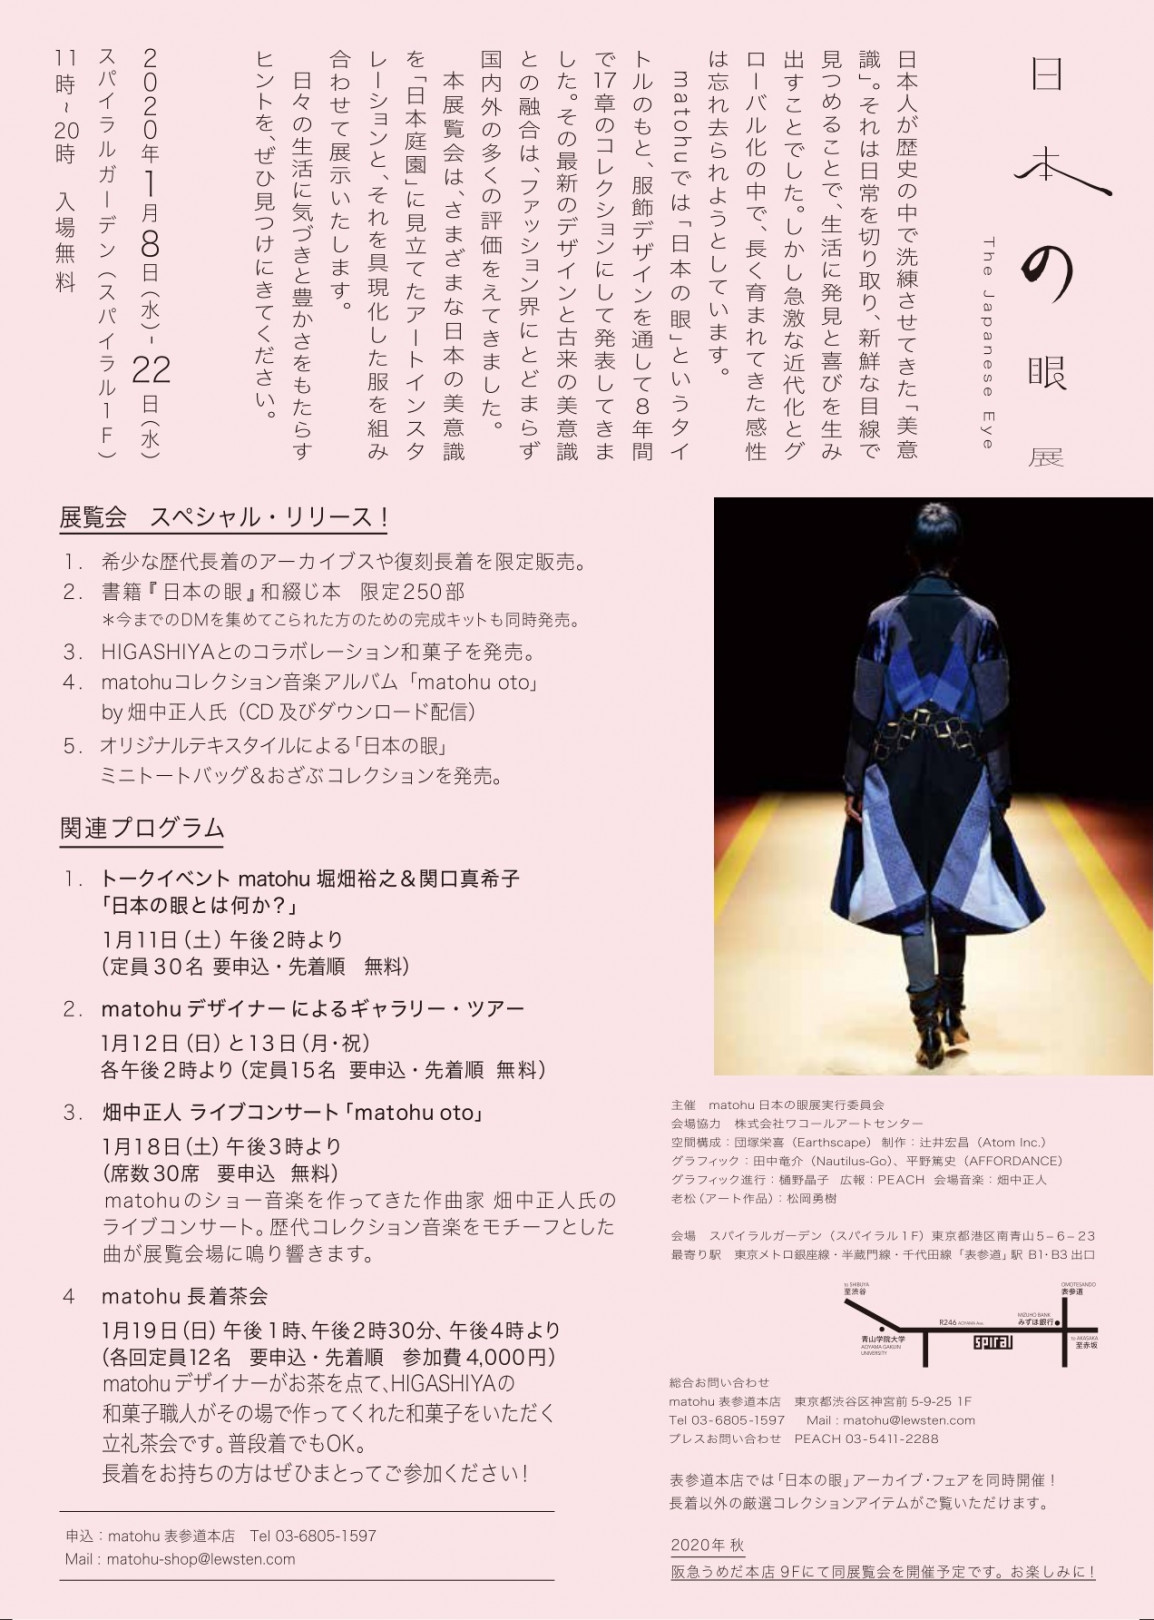 matohu、8年間の集大成を一挙公開。表参道・スパイラルで「日本の眼展」が開催